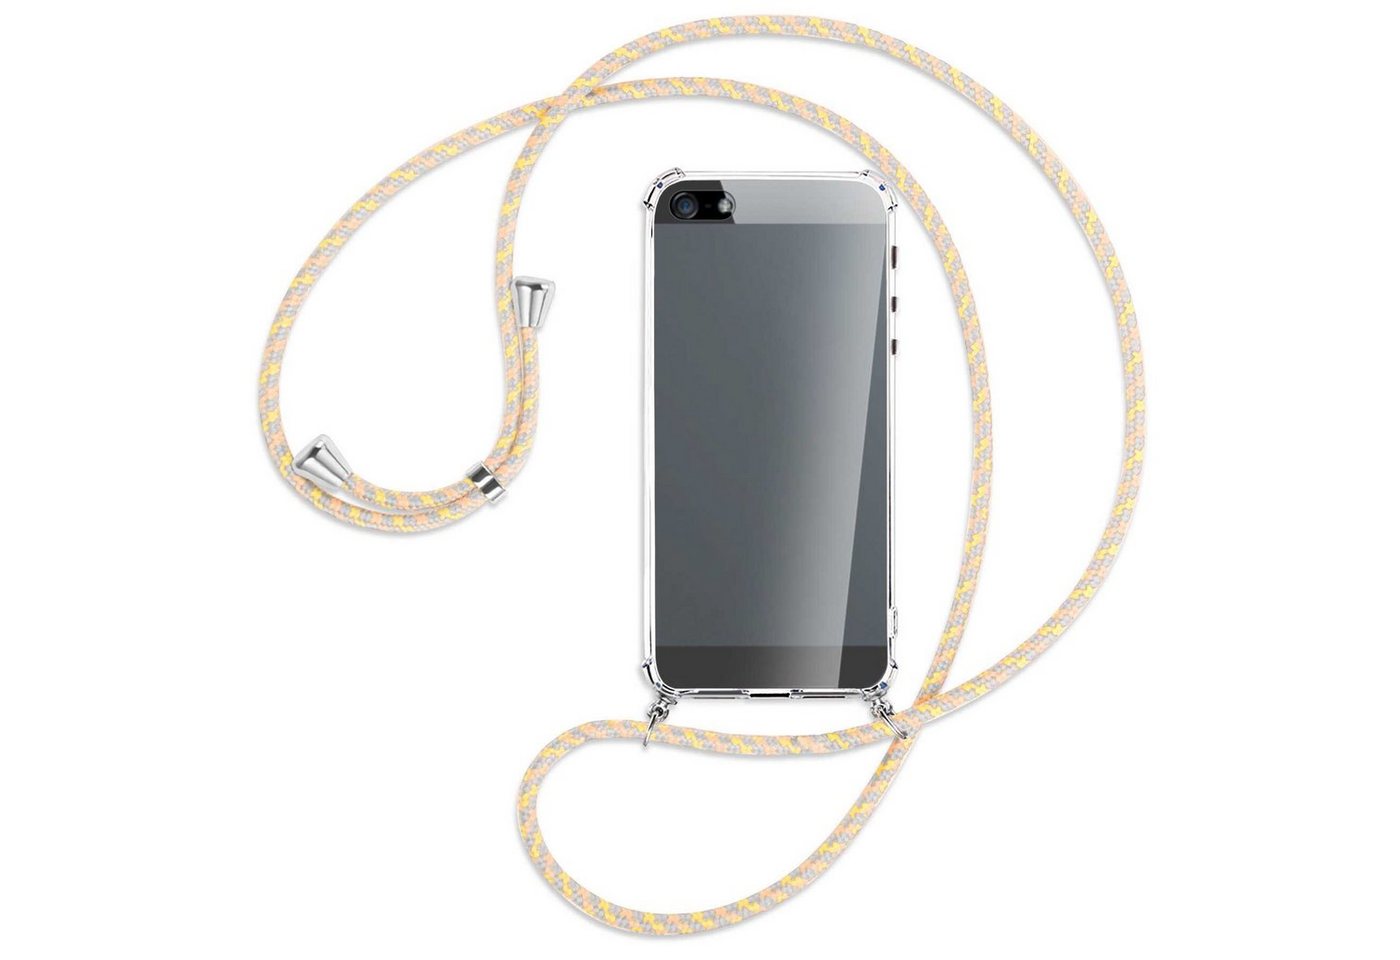 mtb more energy Handykette für Apple iPhone 5, 5S, SE (4.0) [S], Umhängehülle mit Band [NC-027-S] von mtb more energy